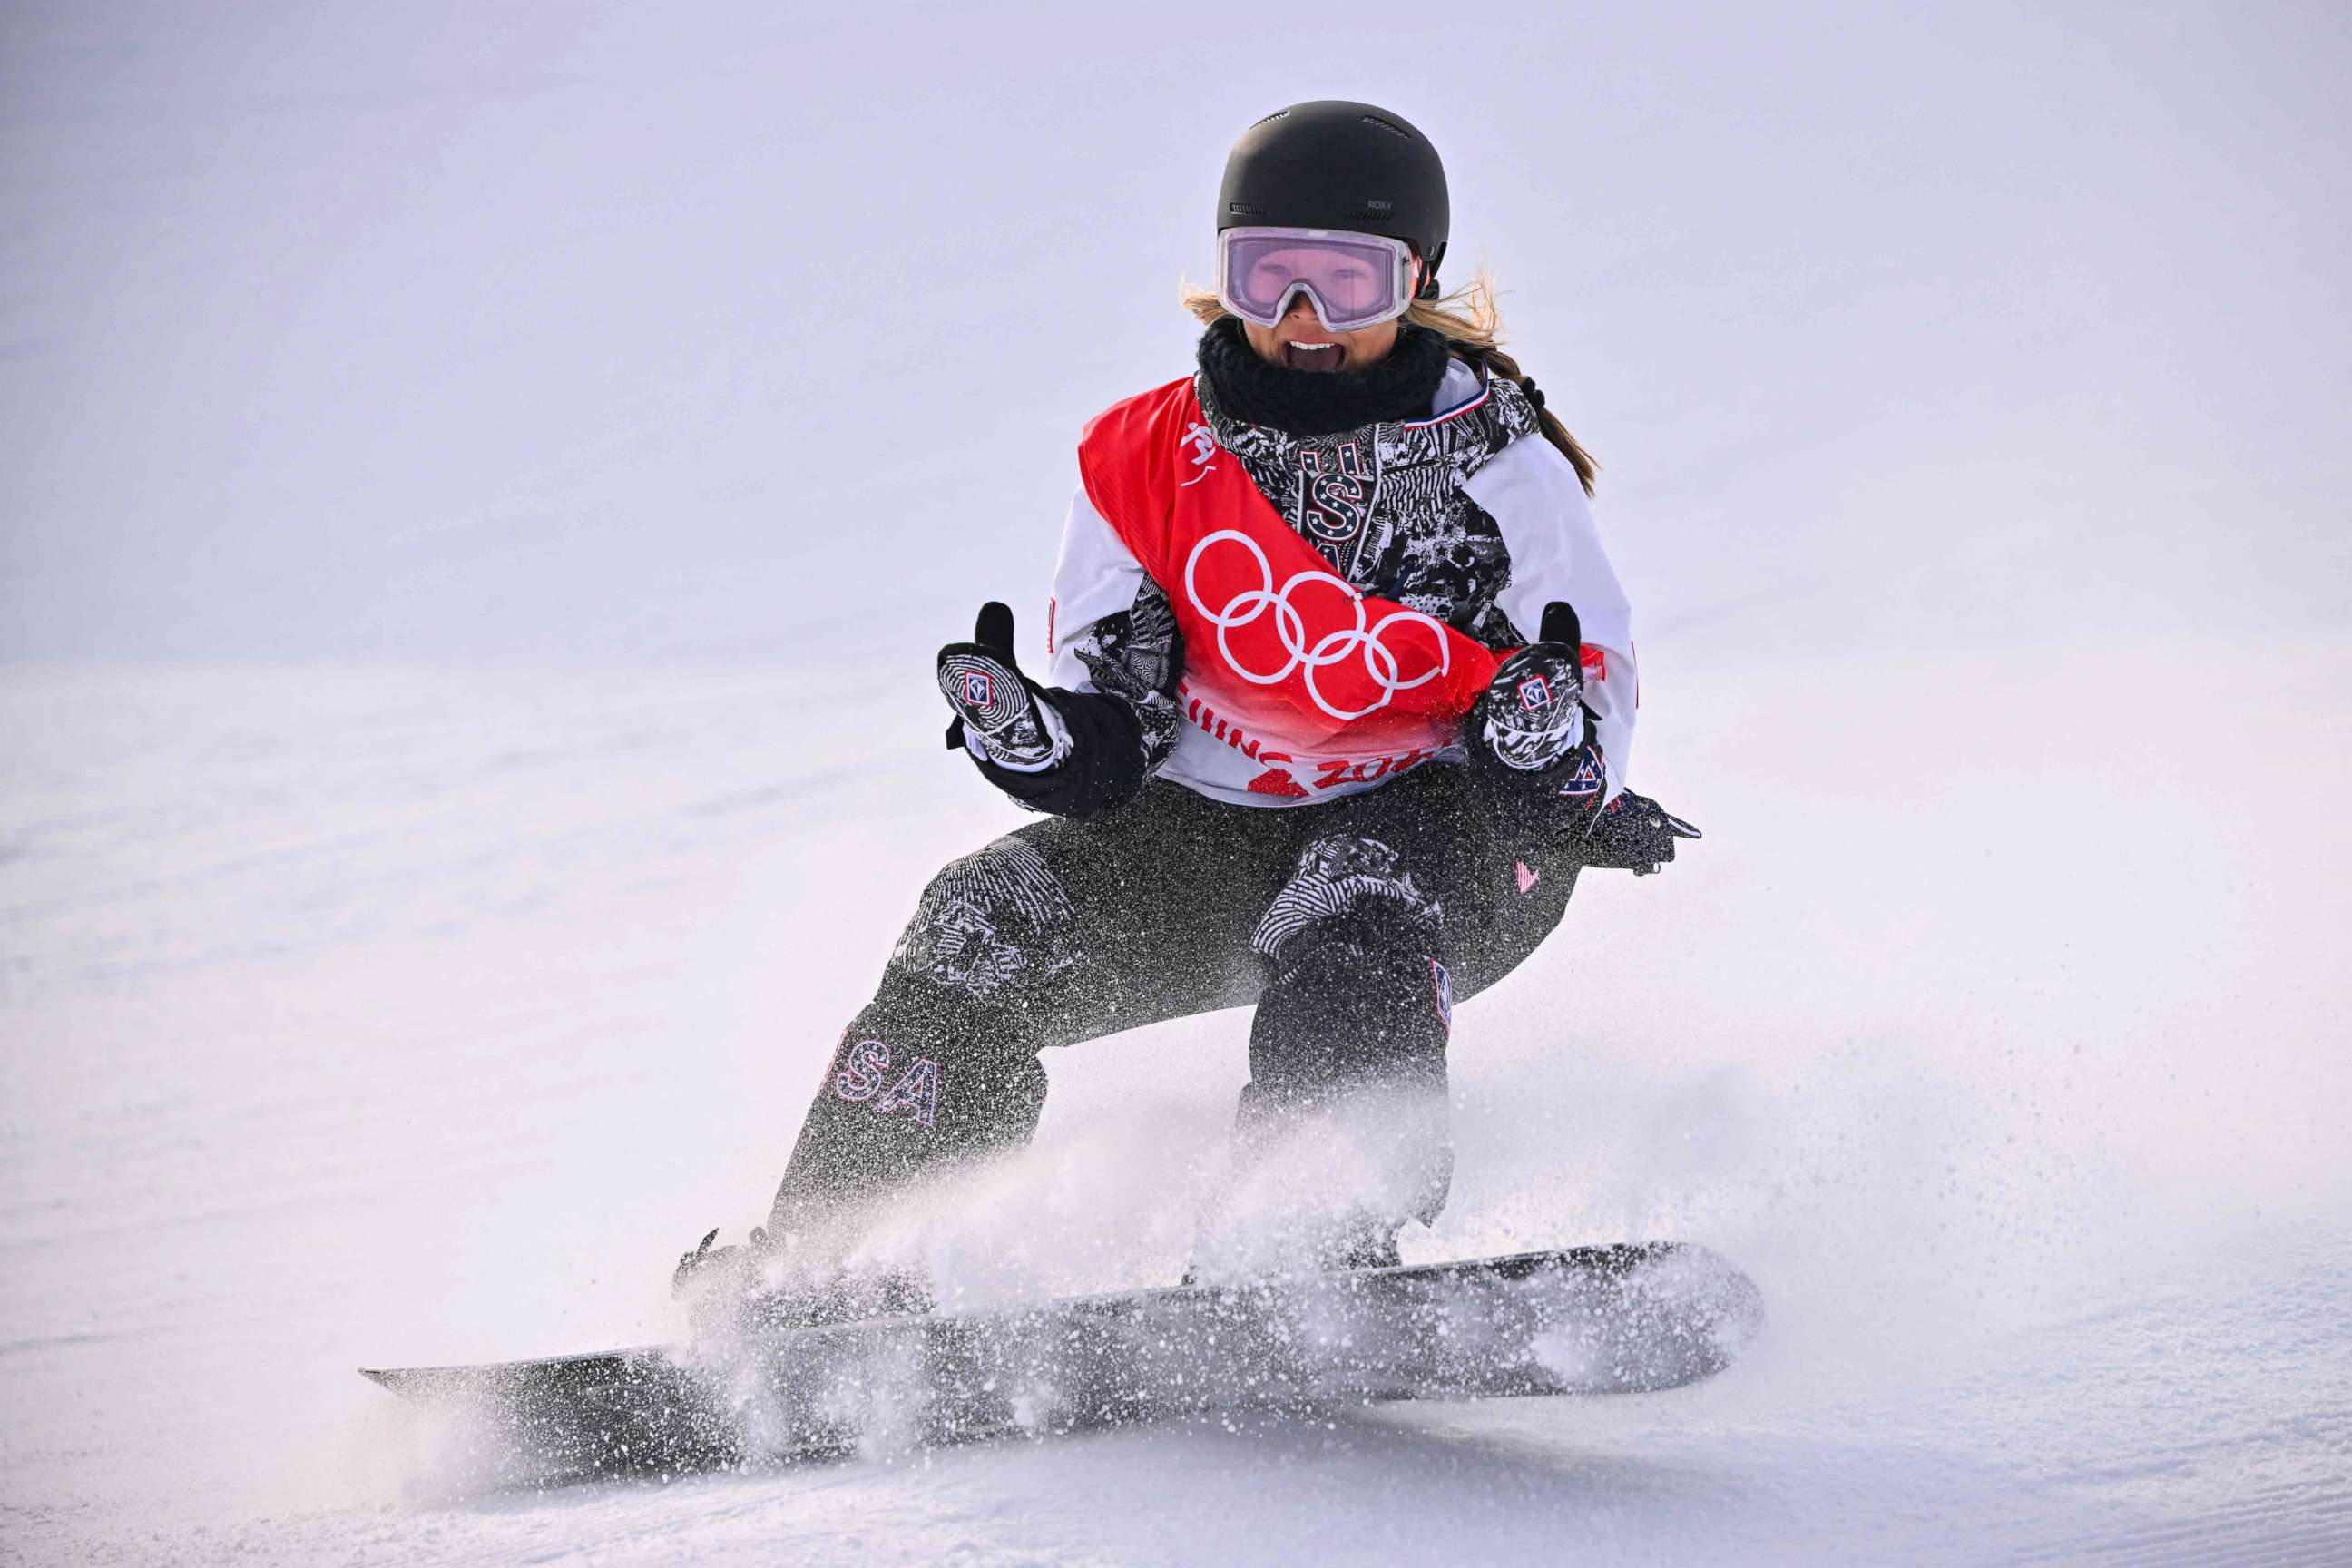 womens snowboarding olympics live